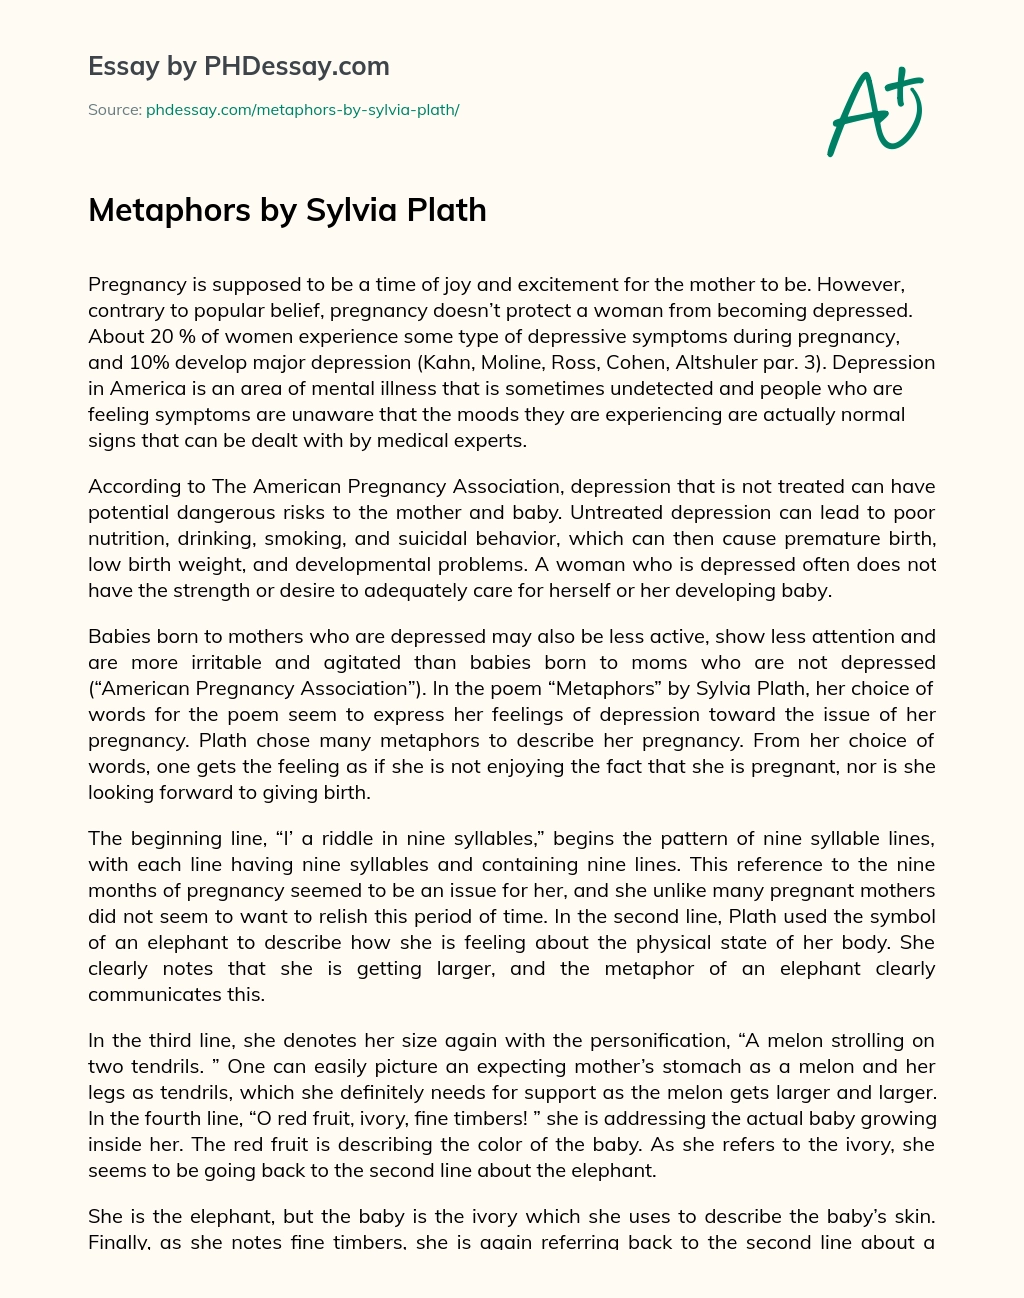 Metaphors by Sylvia Plath essay